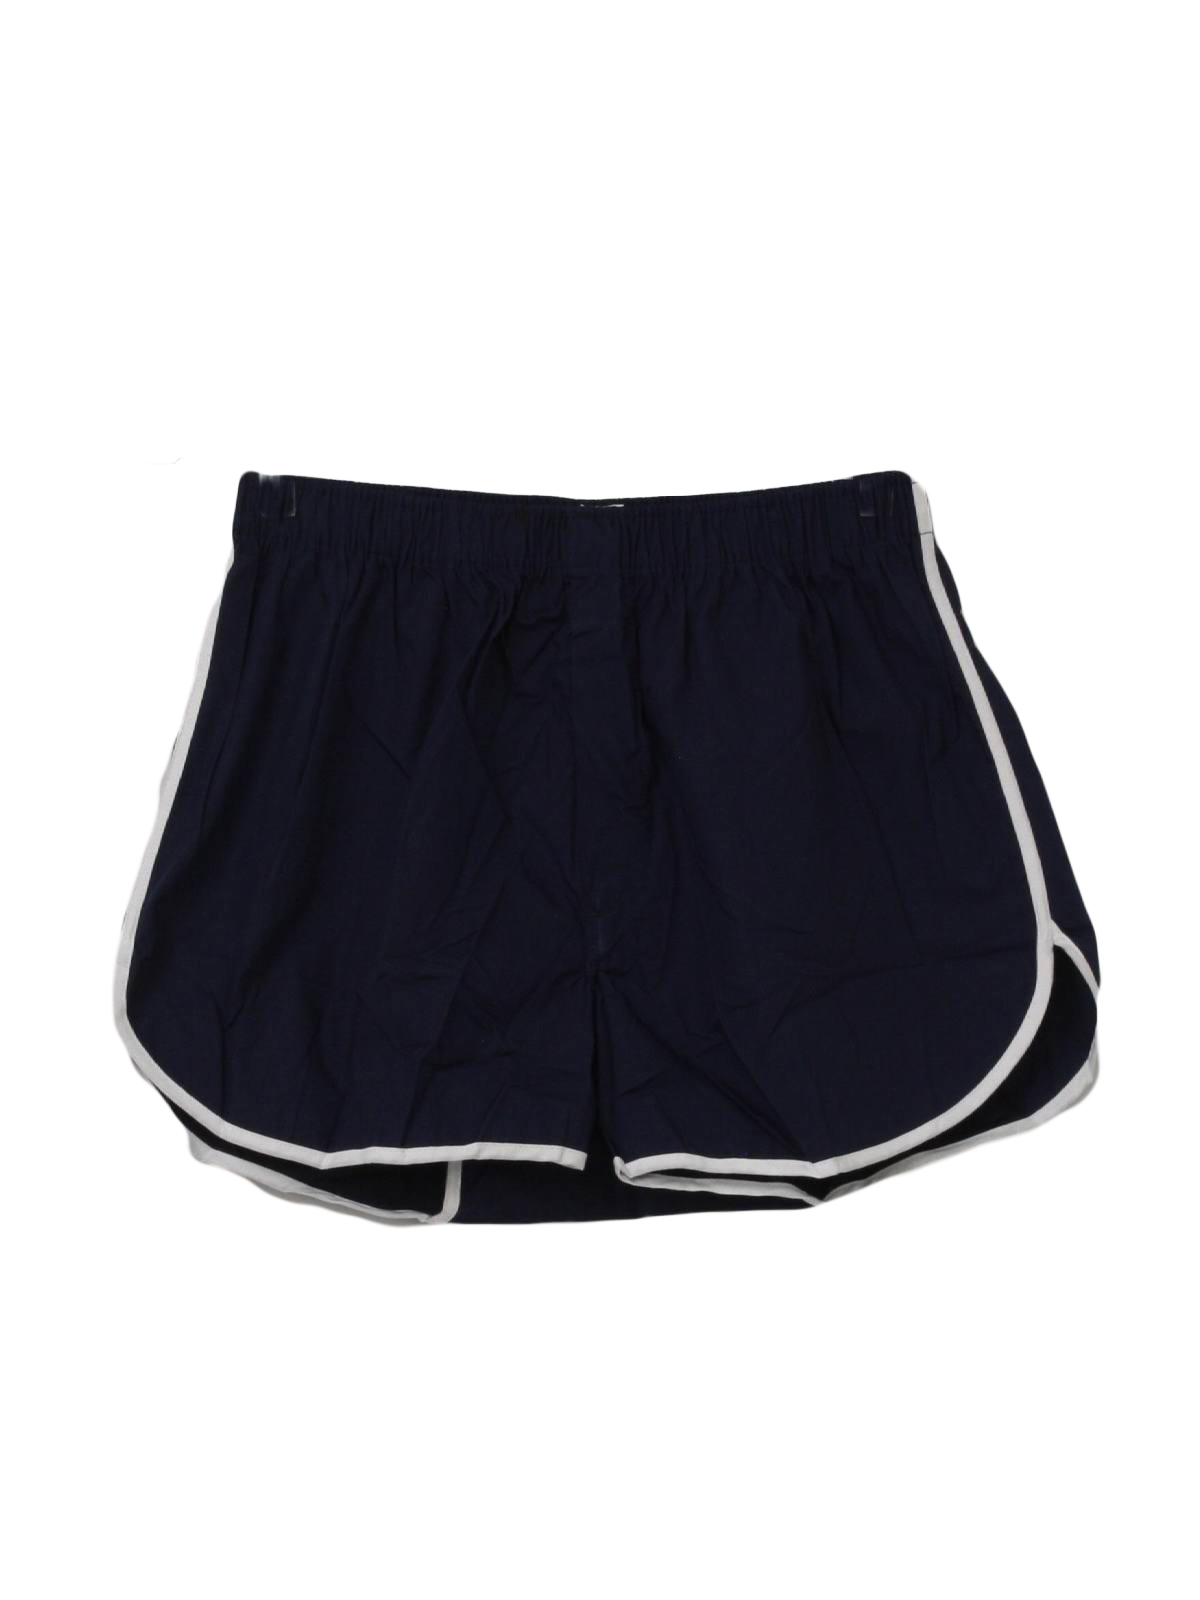 Retro Eighties Shorts: 80s -Le Breve- Unisex navy blue background ...